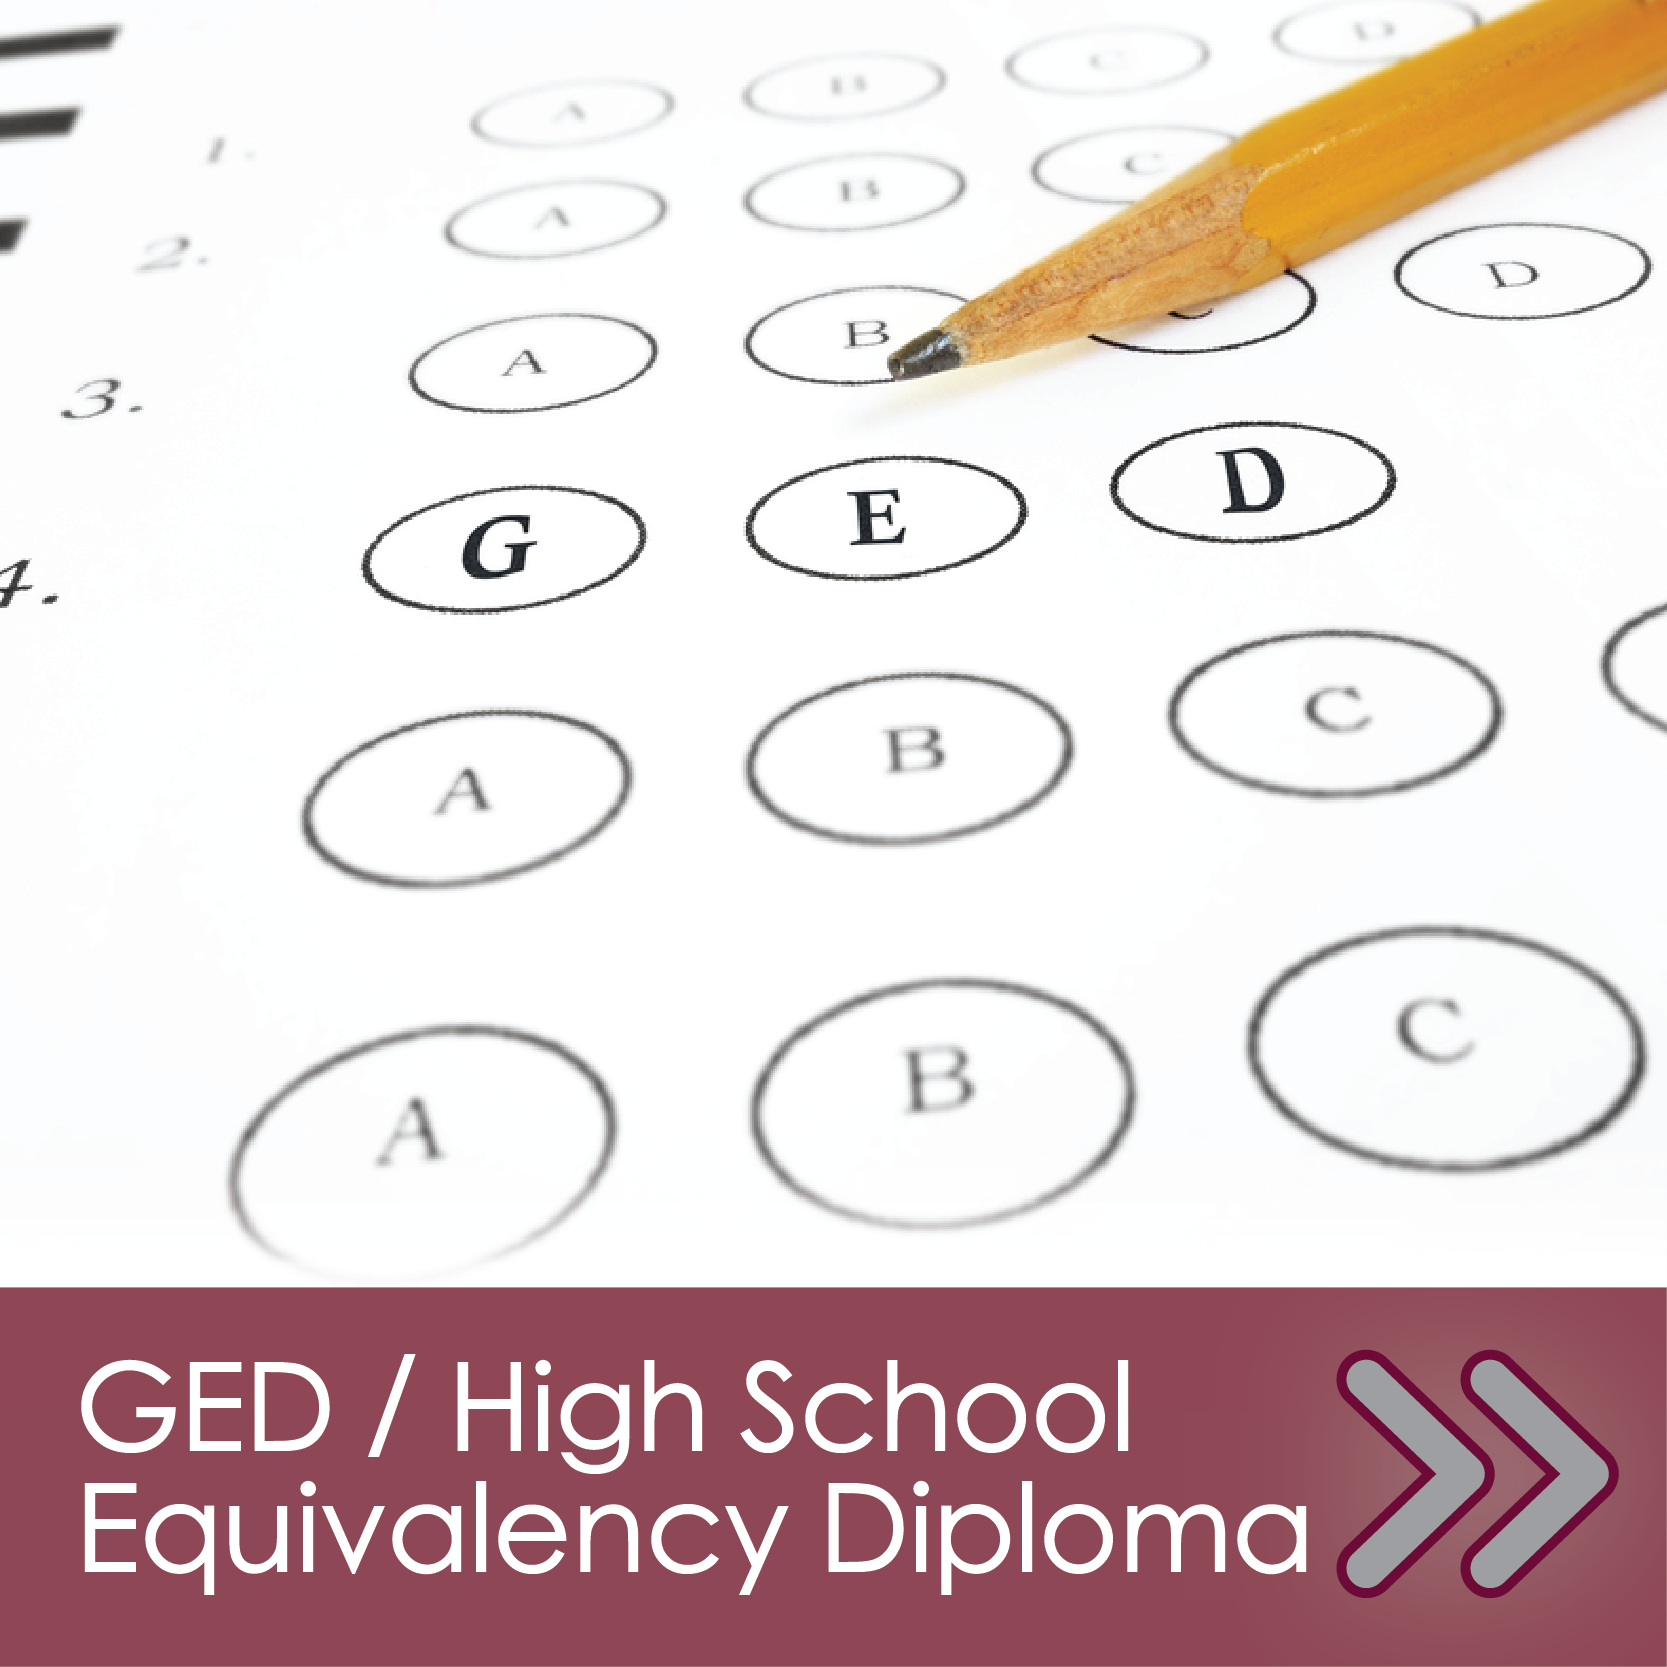 GED / High School Equivalency Diploma